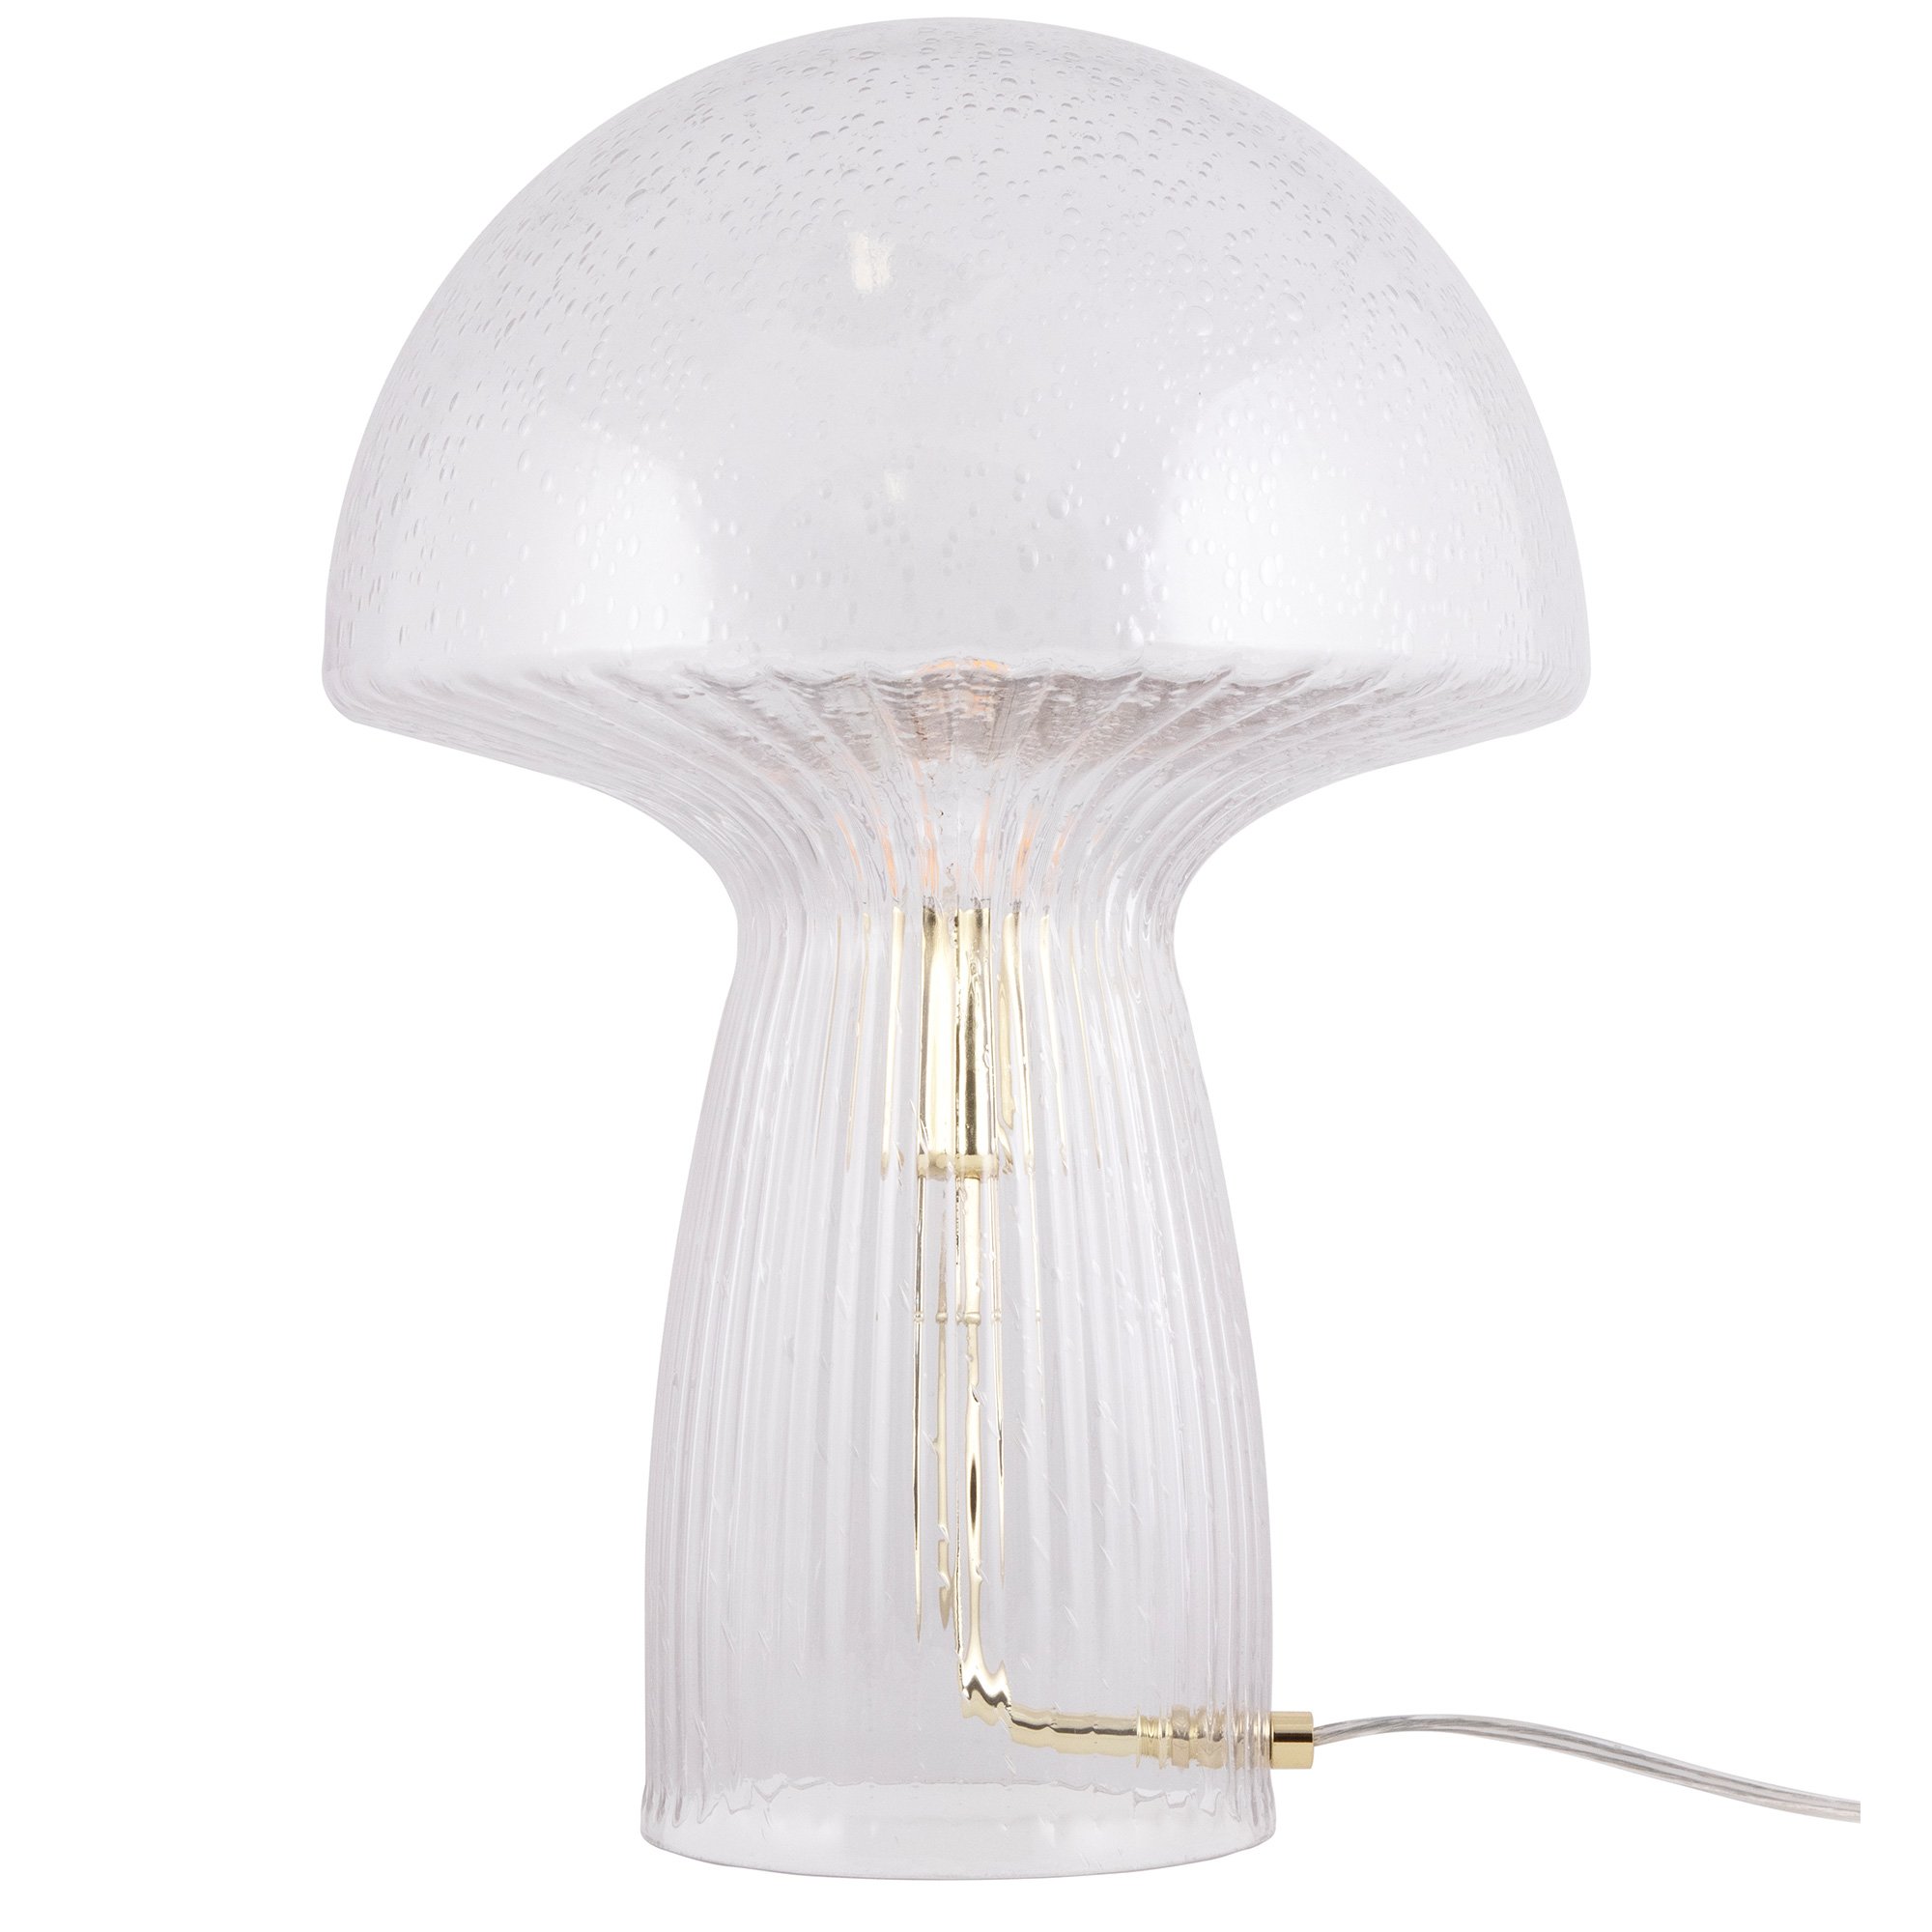 5: Globen Lighting Fungo Special Edition bordlampe klar, 30 cm.